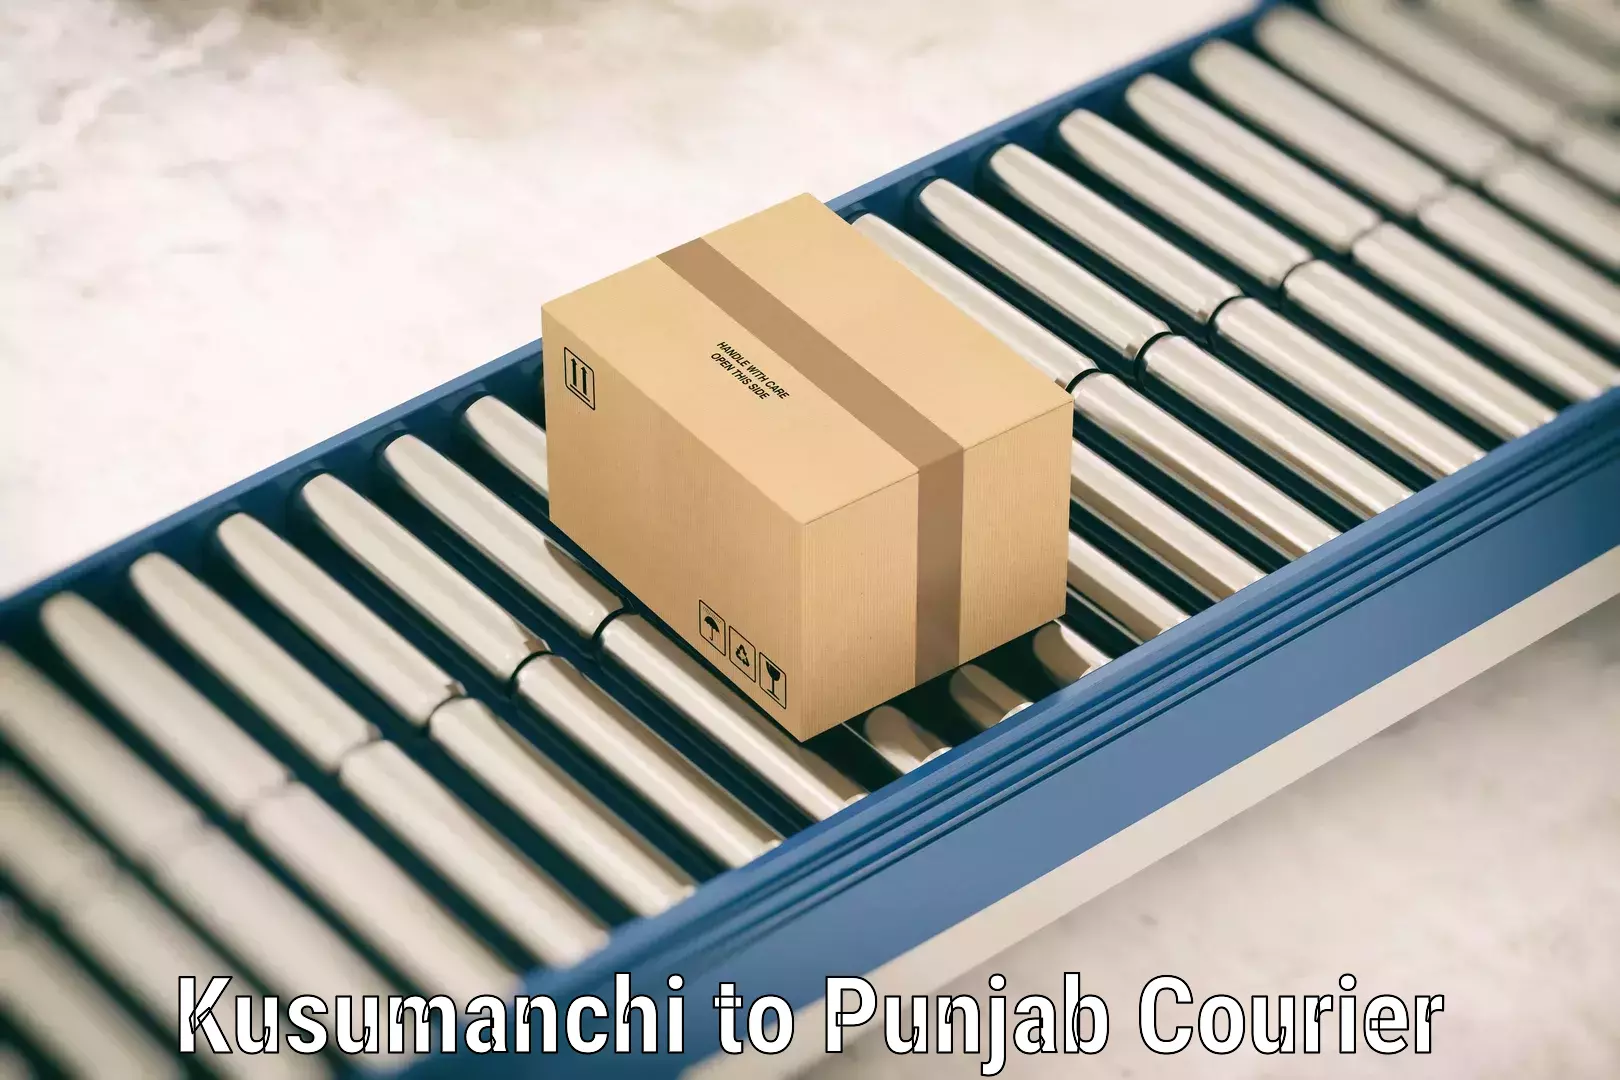 Baggage delivery technology Kusumanchi to Punjab